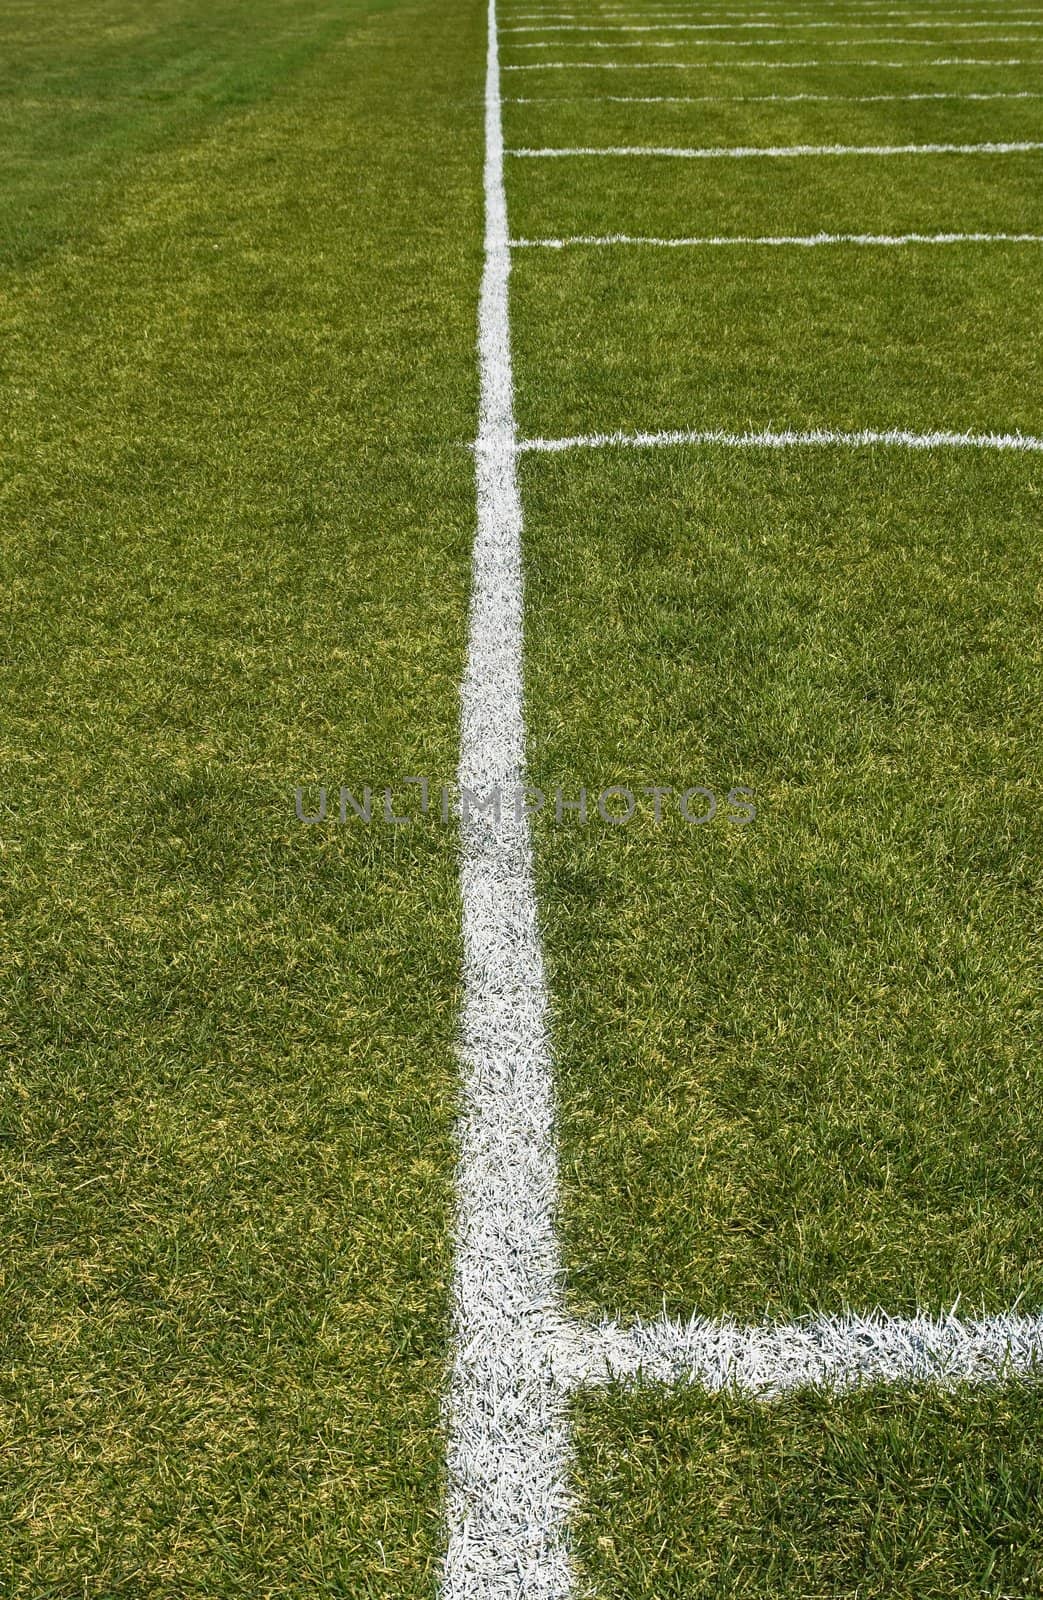 Side boundary line of a football field by anikasalsera